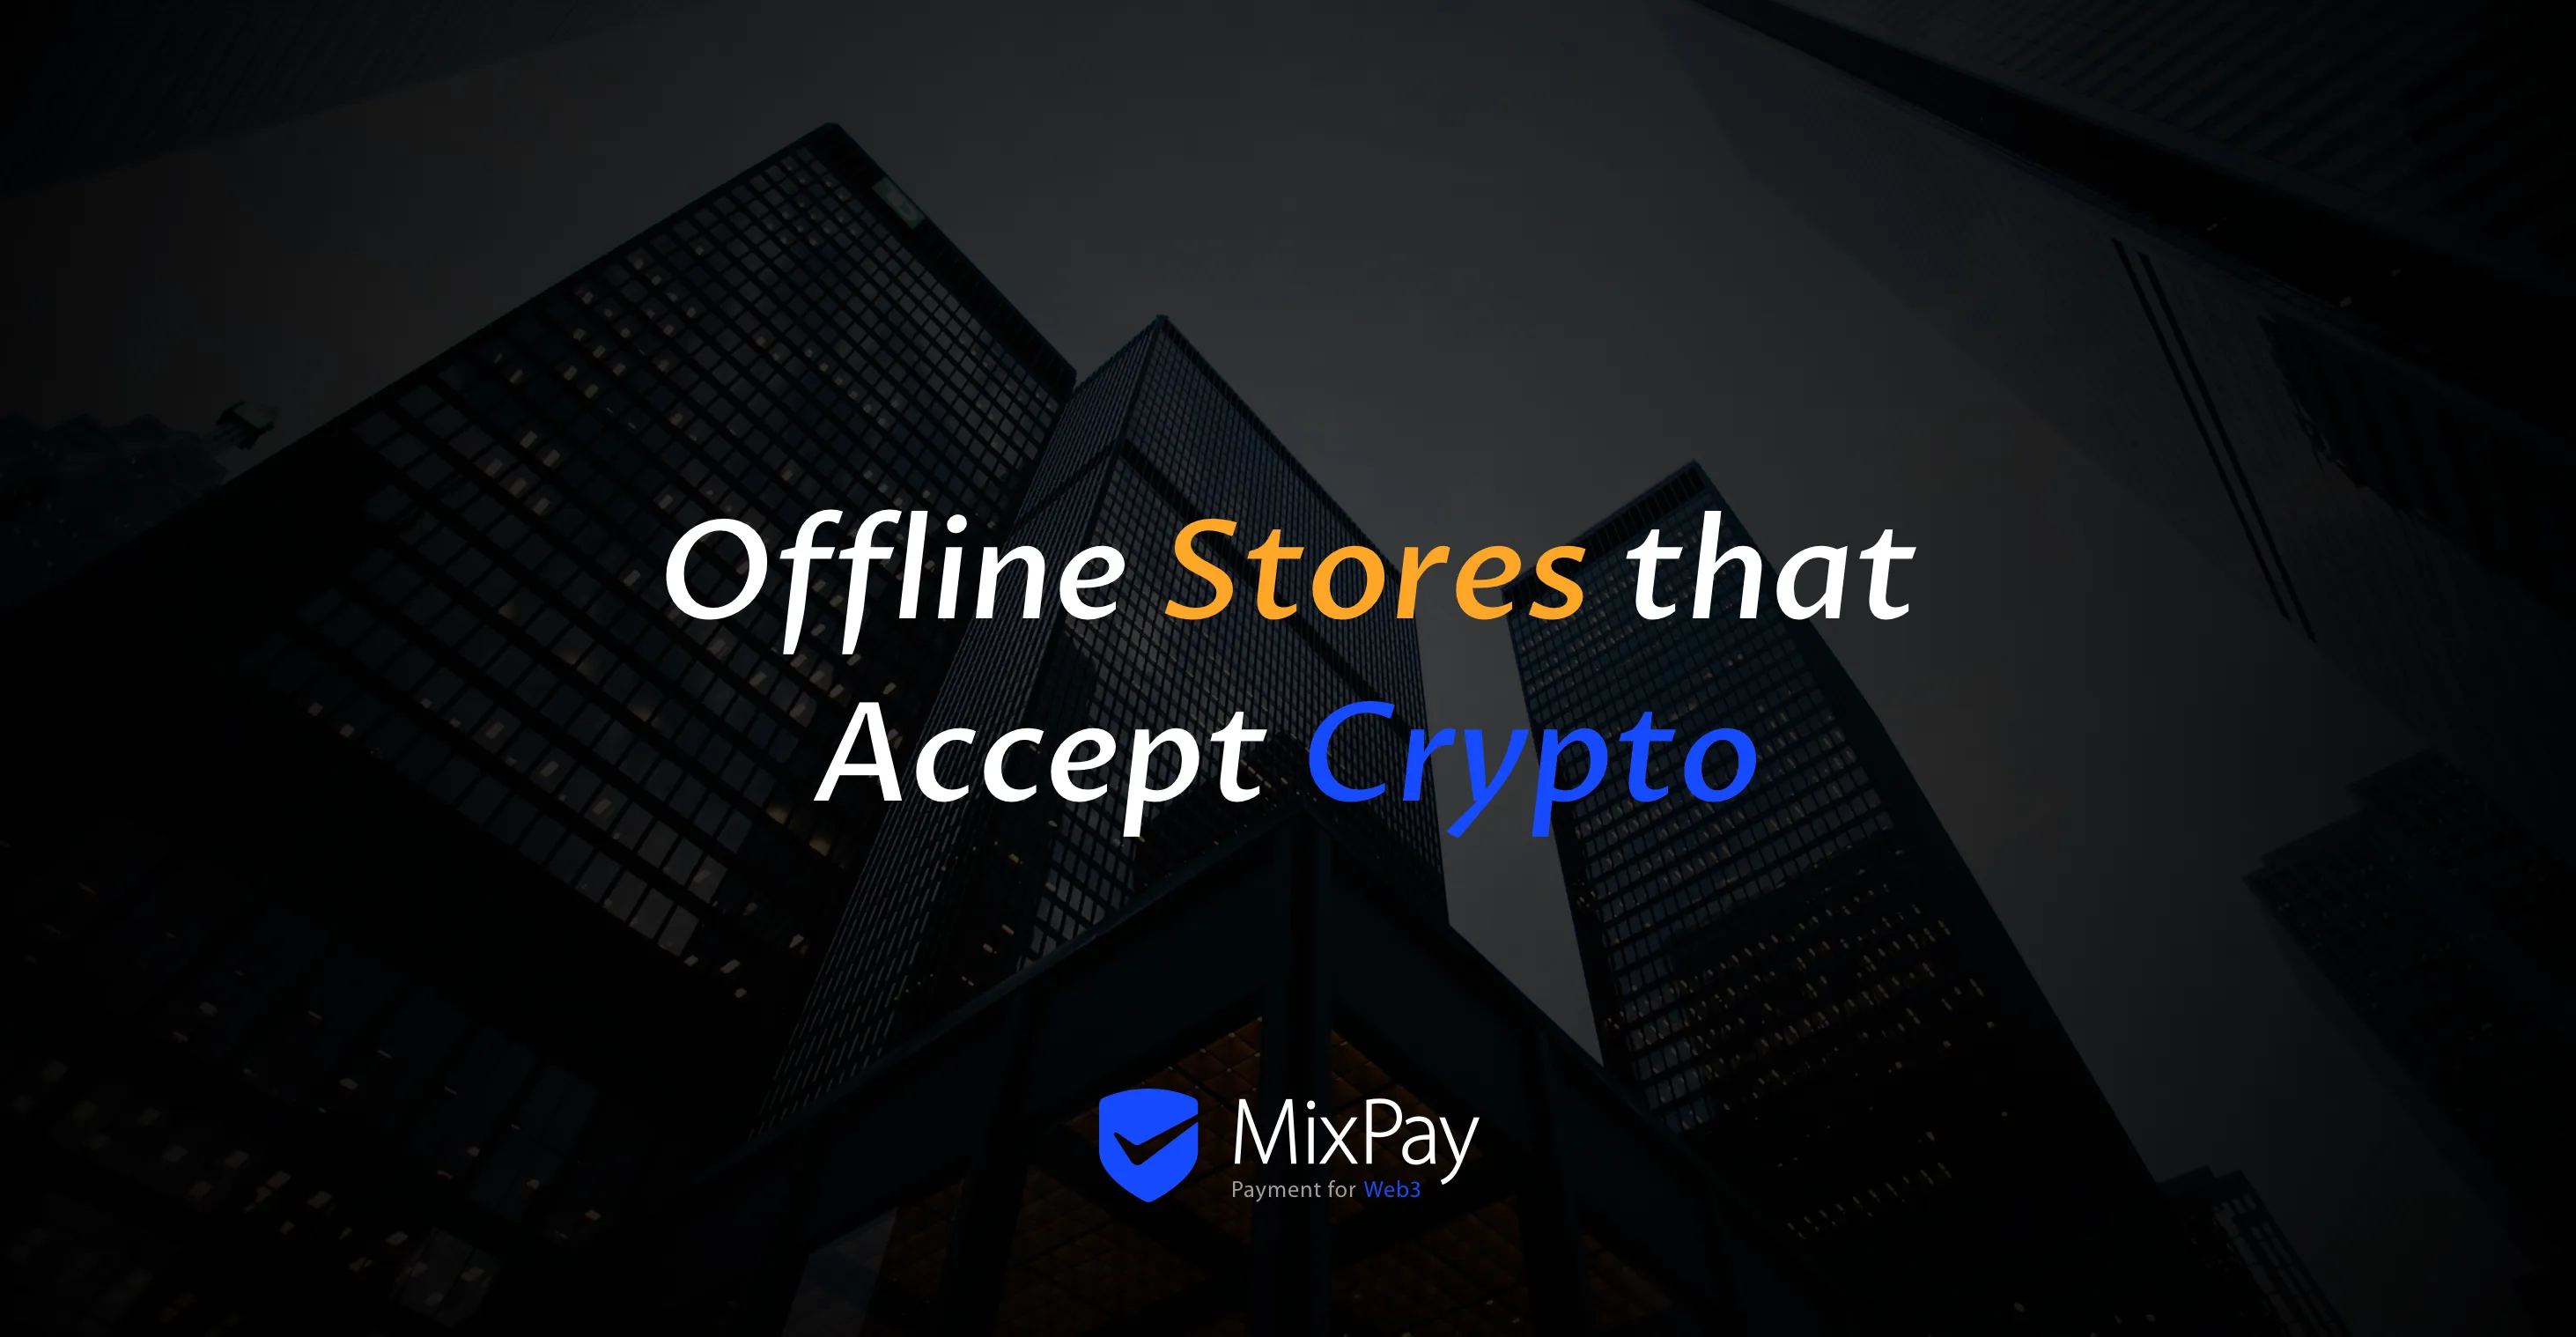 Tiendas offline que aceptan criptomonedas con MixPay